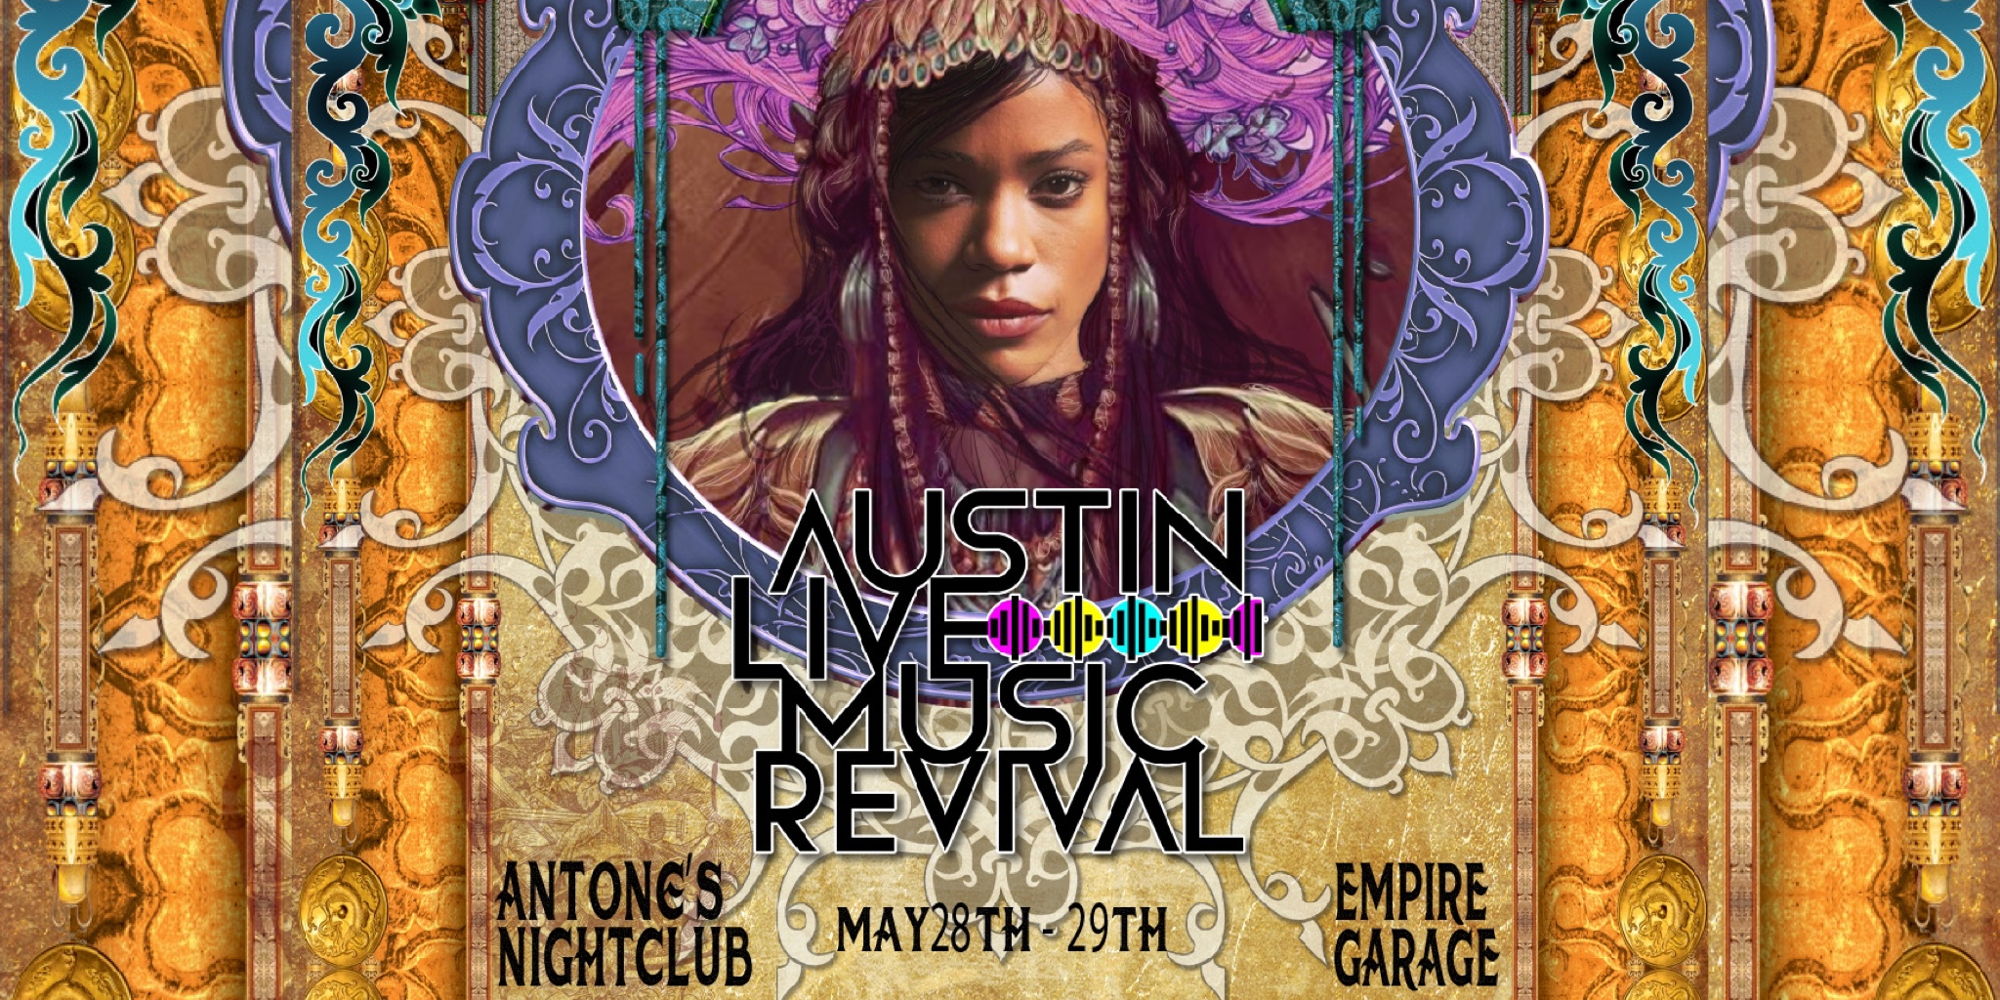 Austin Live Music Revival at Empire Garage - 5/28 + 5/29 promotional image